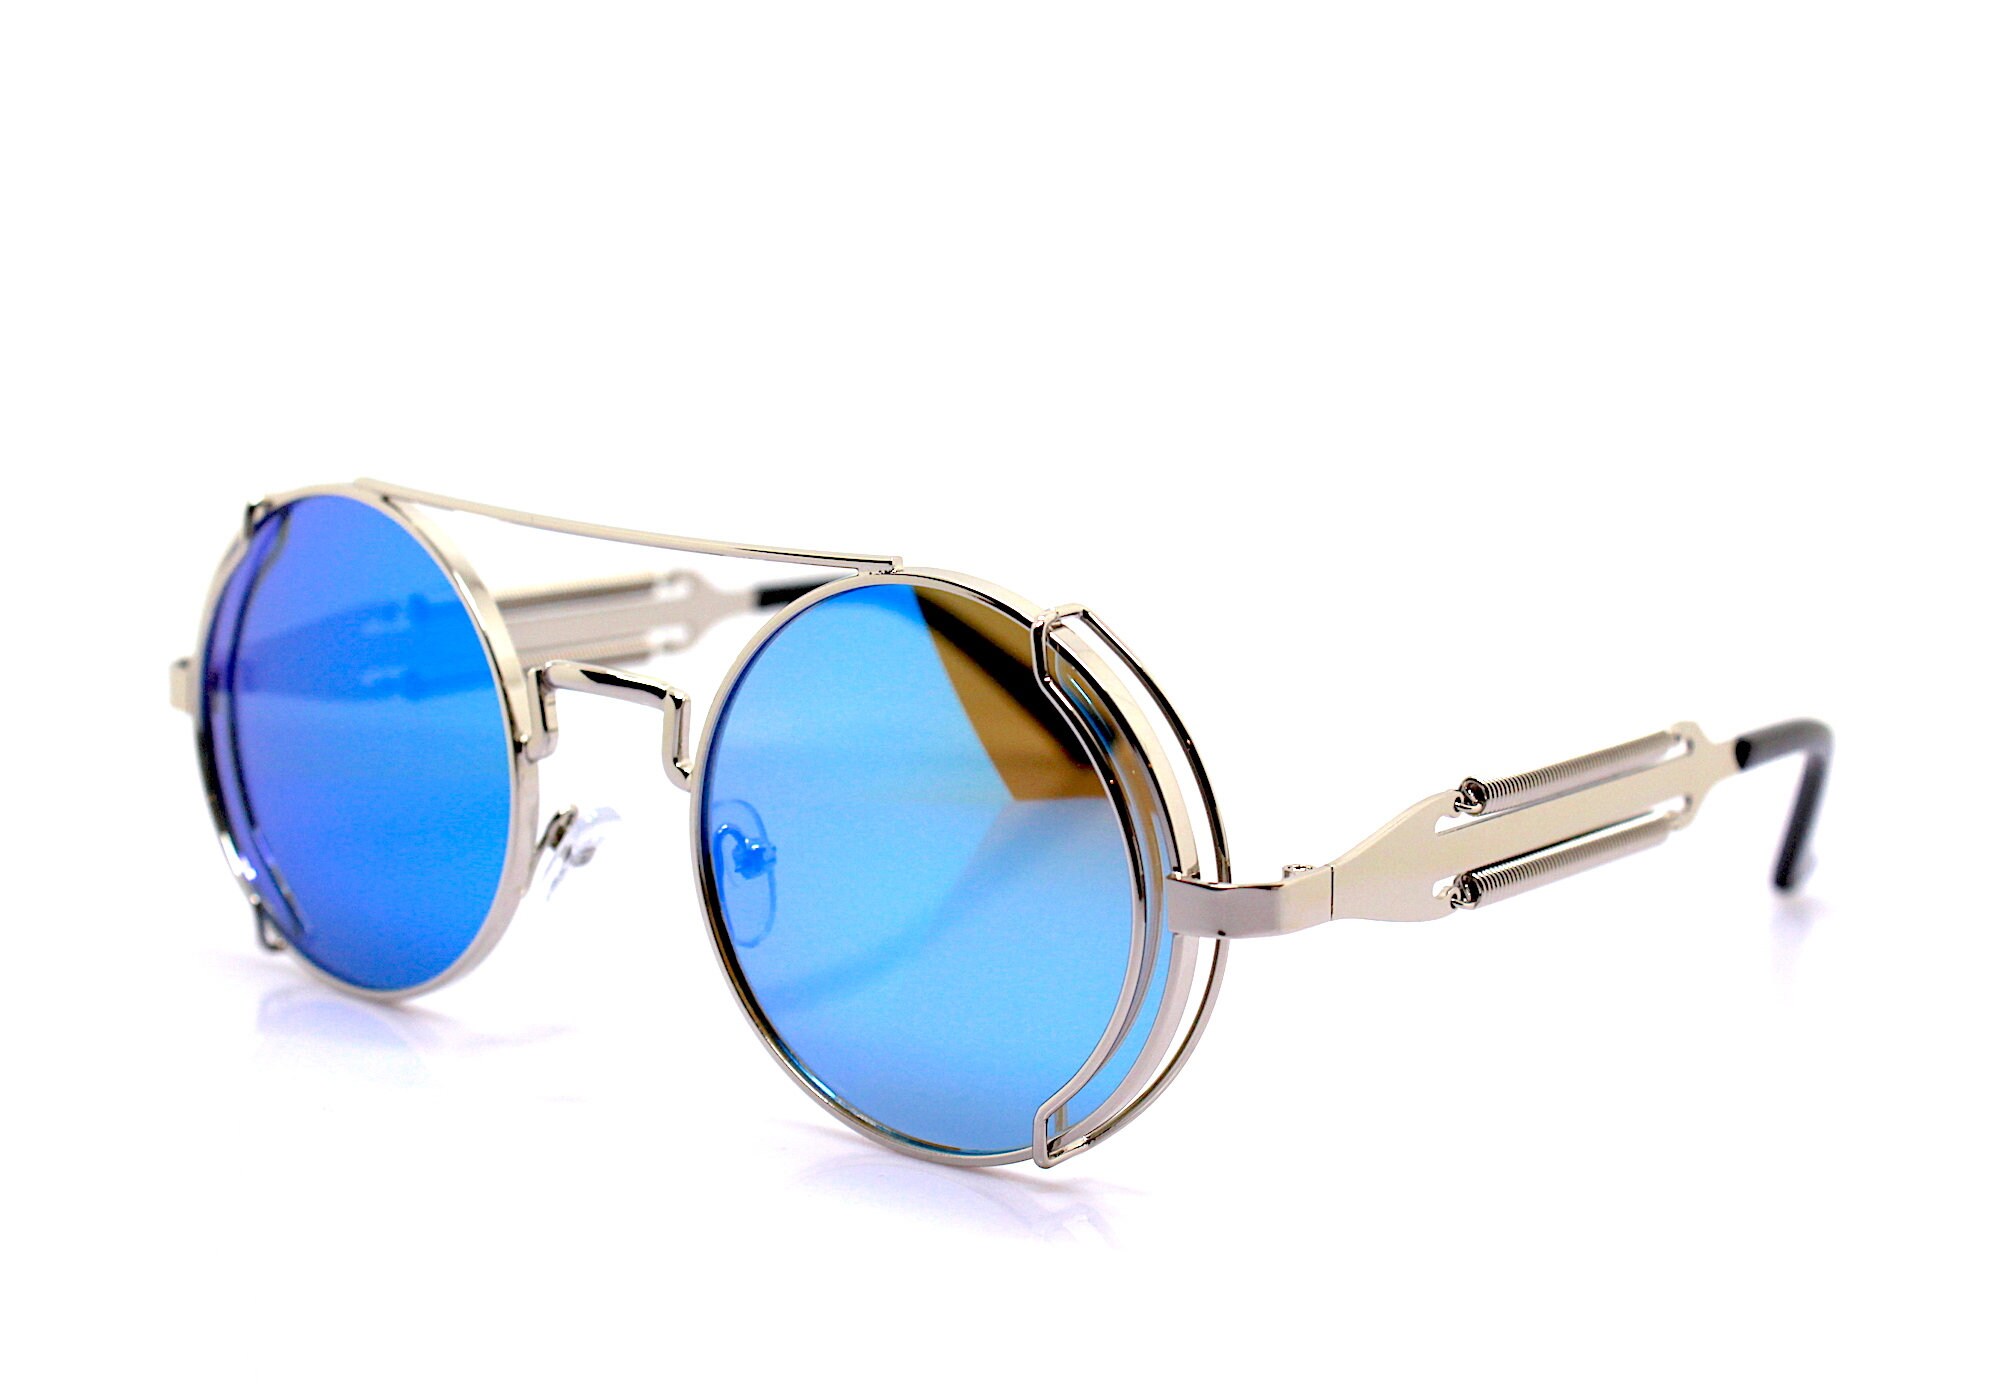 Round Sunglasses man woman aviator pilot SILVER frame mirror | Etsy